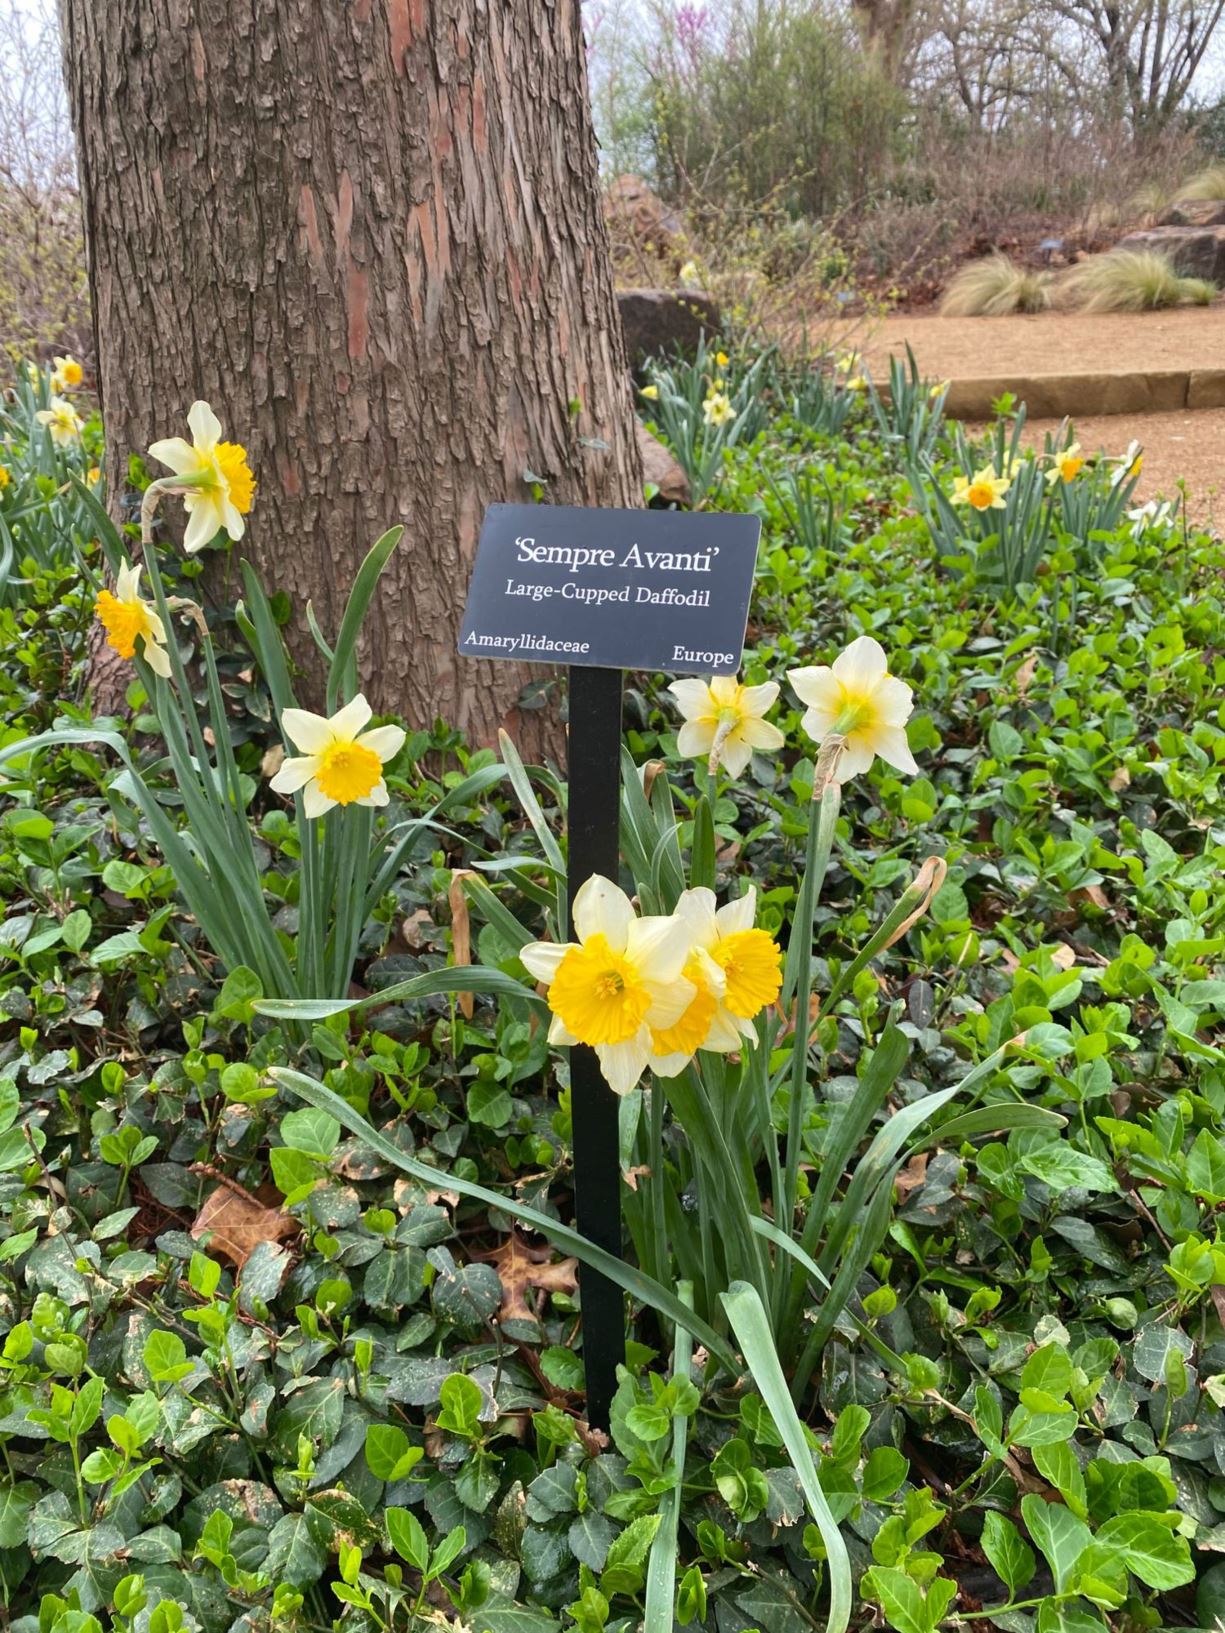 Narcissus 'Sempre Avanti' - Large-Cupped Daffodil, Daffodil